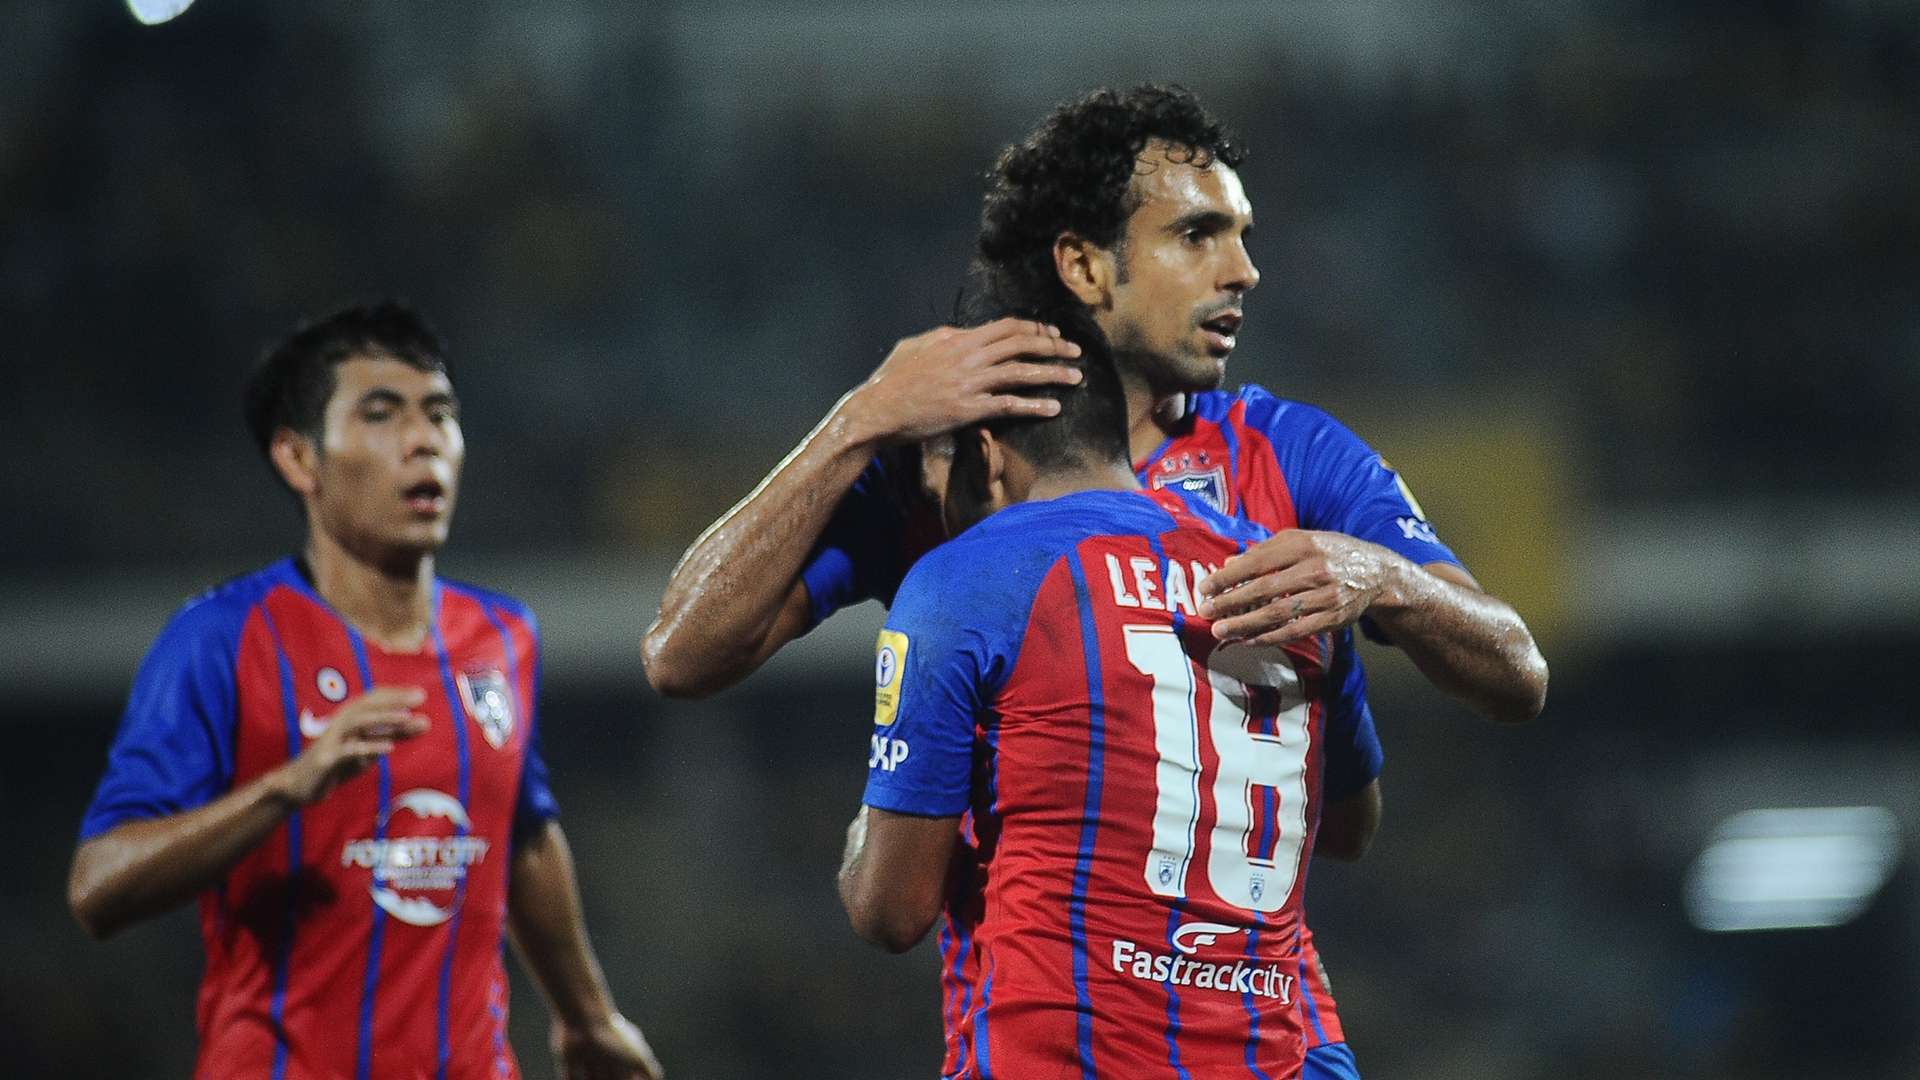 Diogo Luis Santo, Perak v Johor Darul Ta'zim, Malaysia Super League, 6 Jul 2019